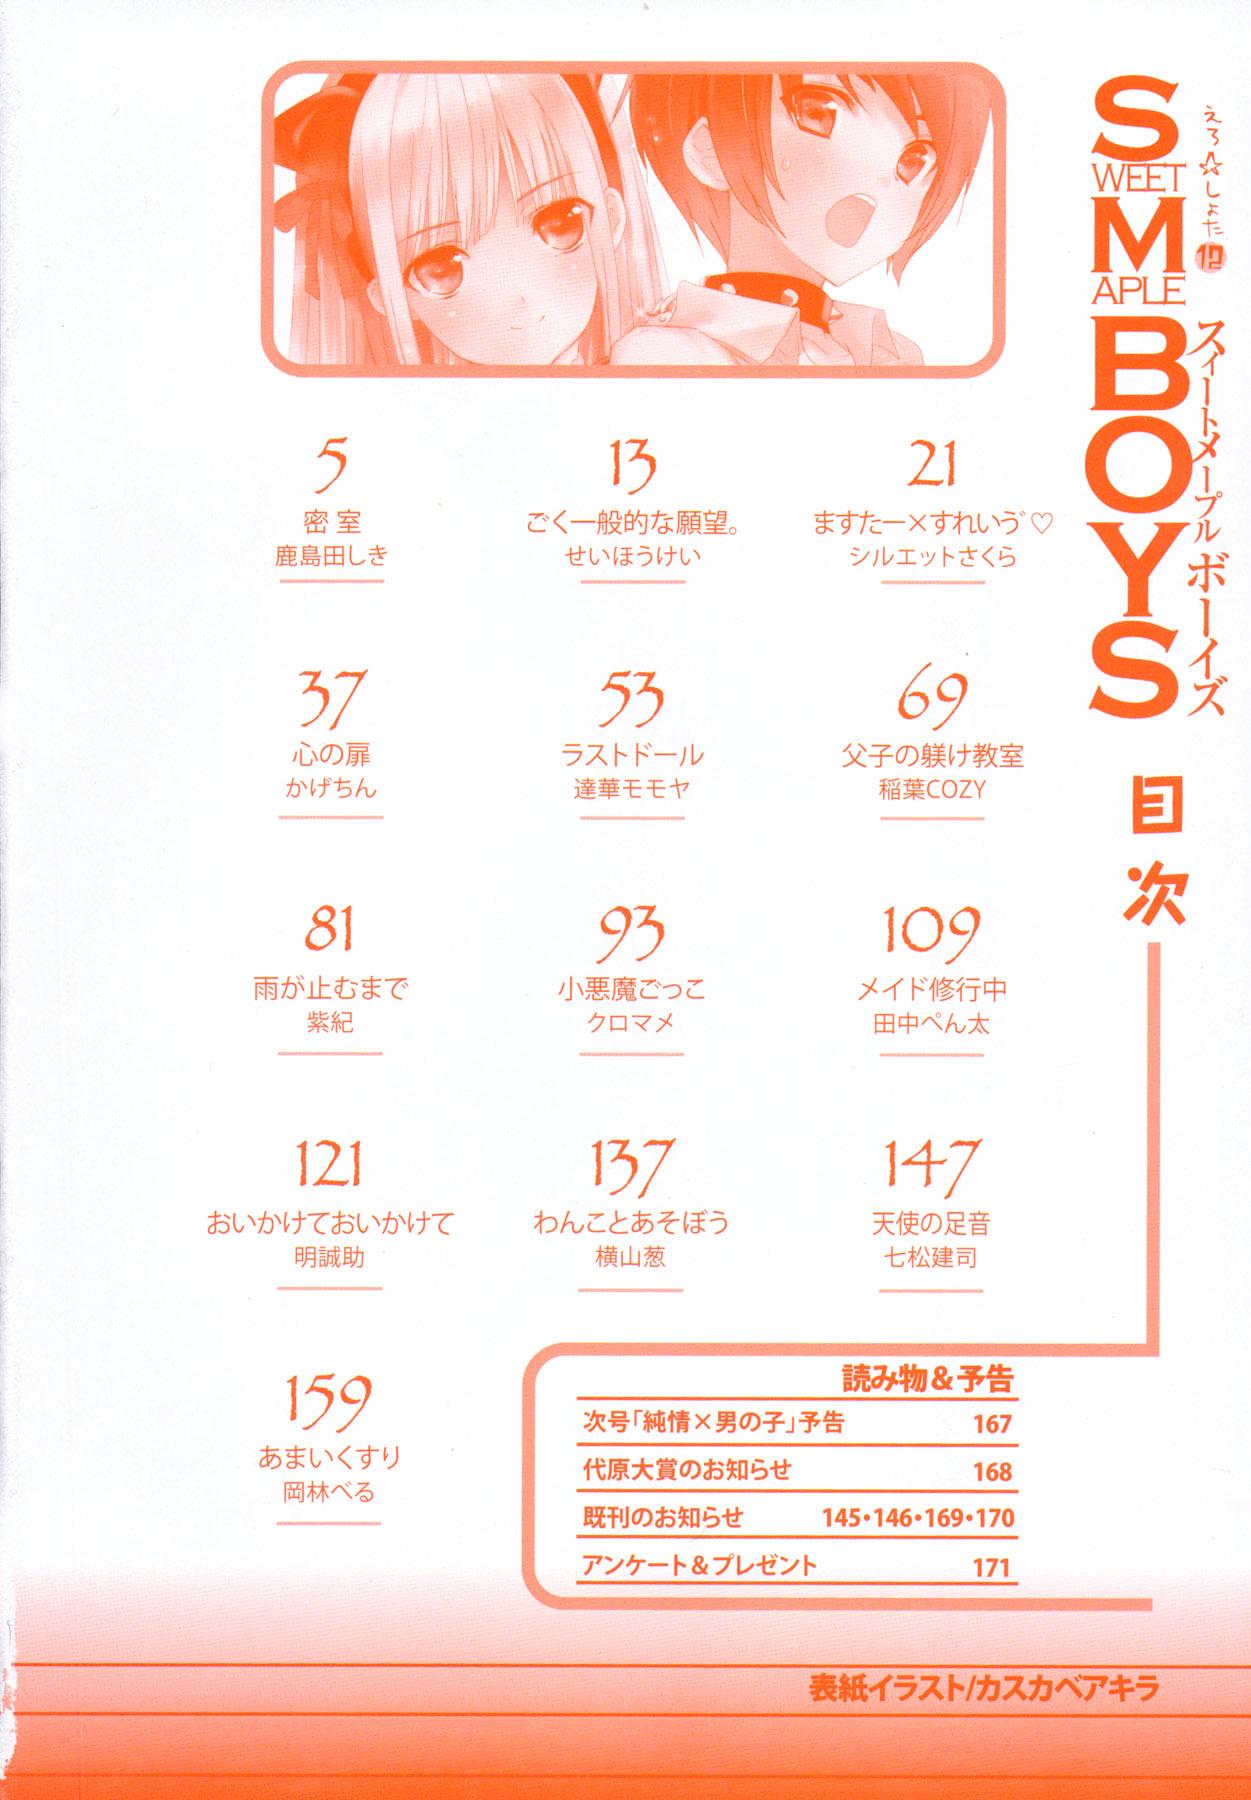 Bangkok Ero Shota 12 - Sweet Maple Boys Banging - Page 3